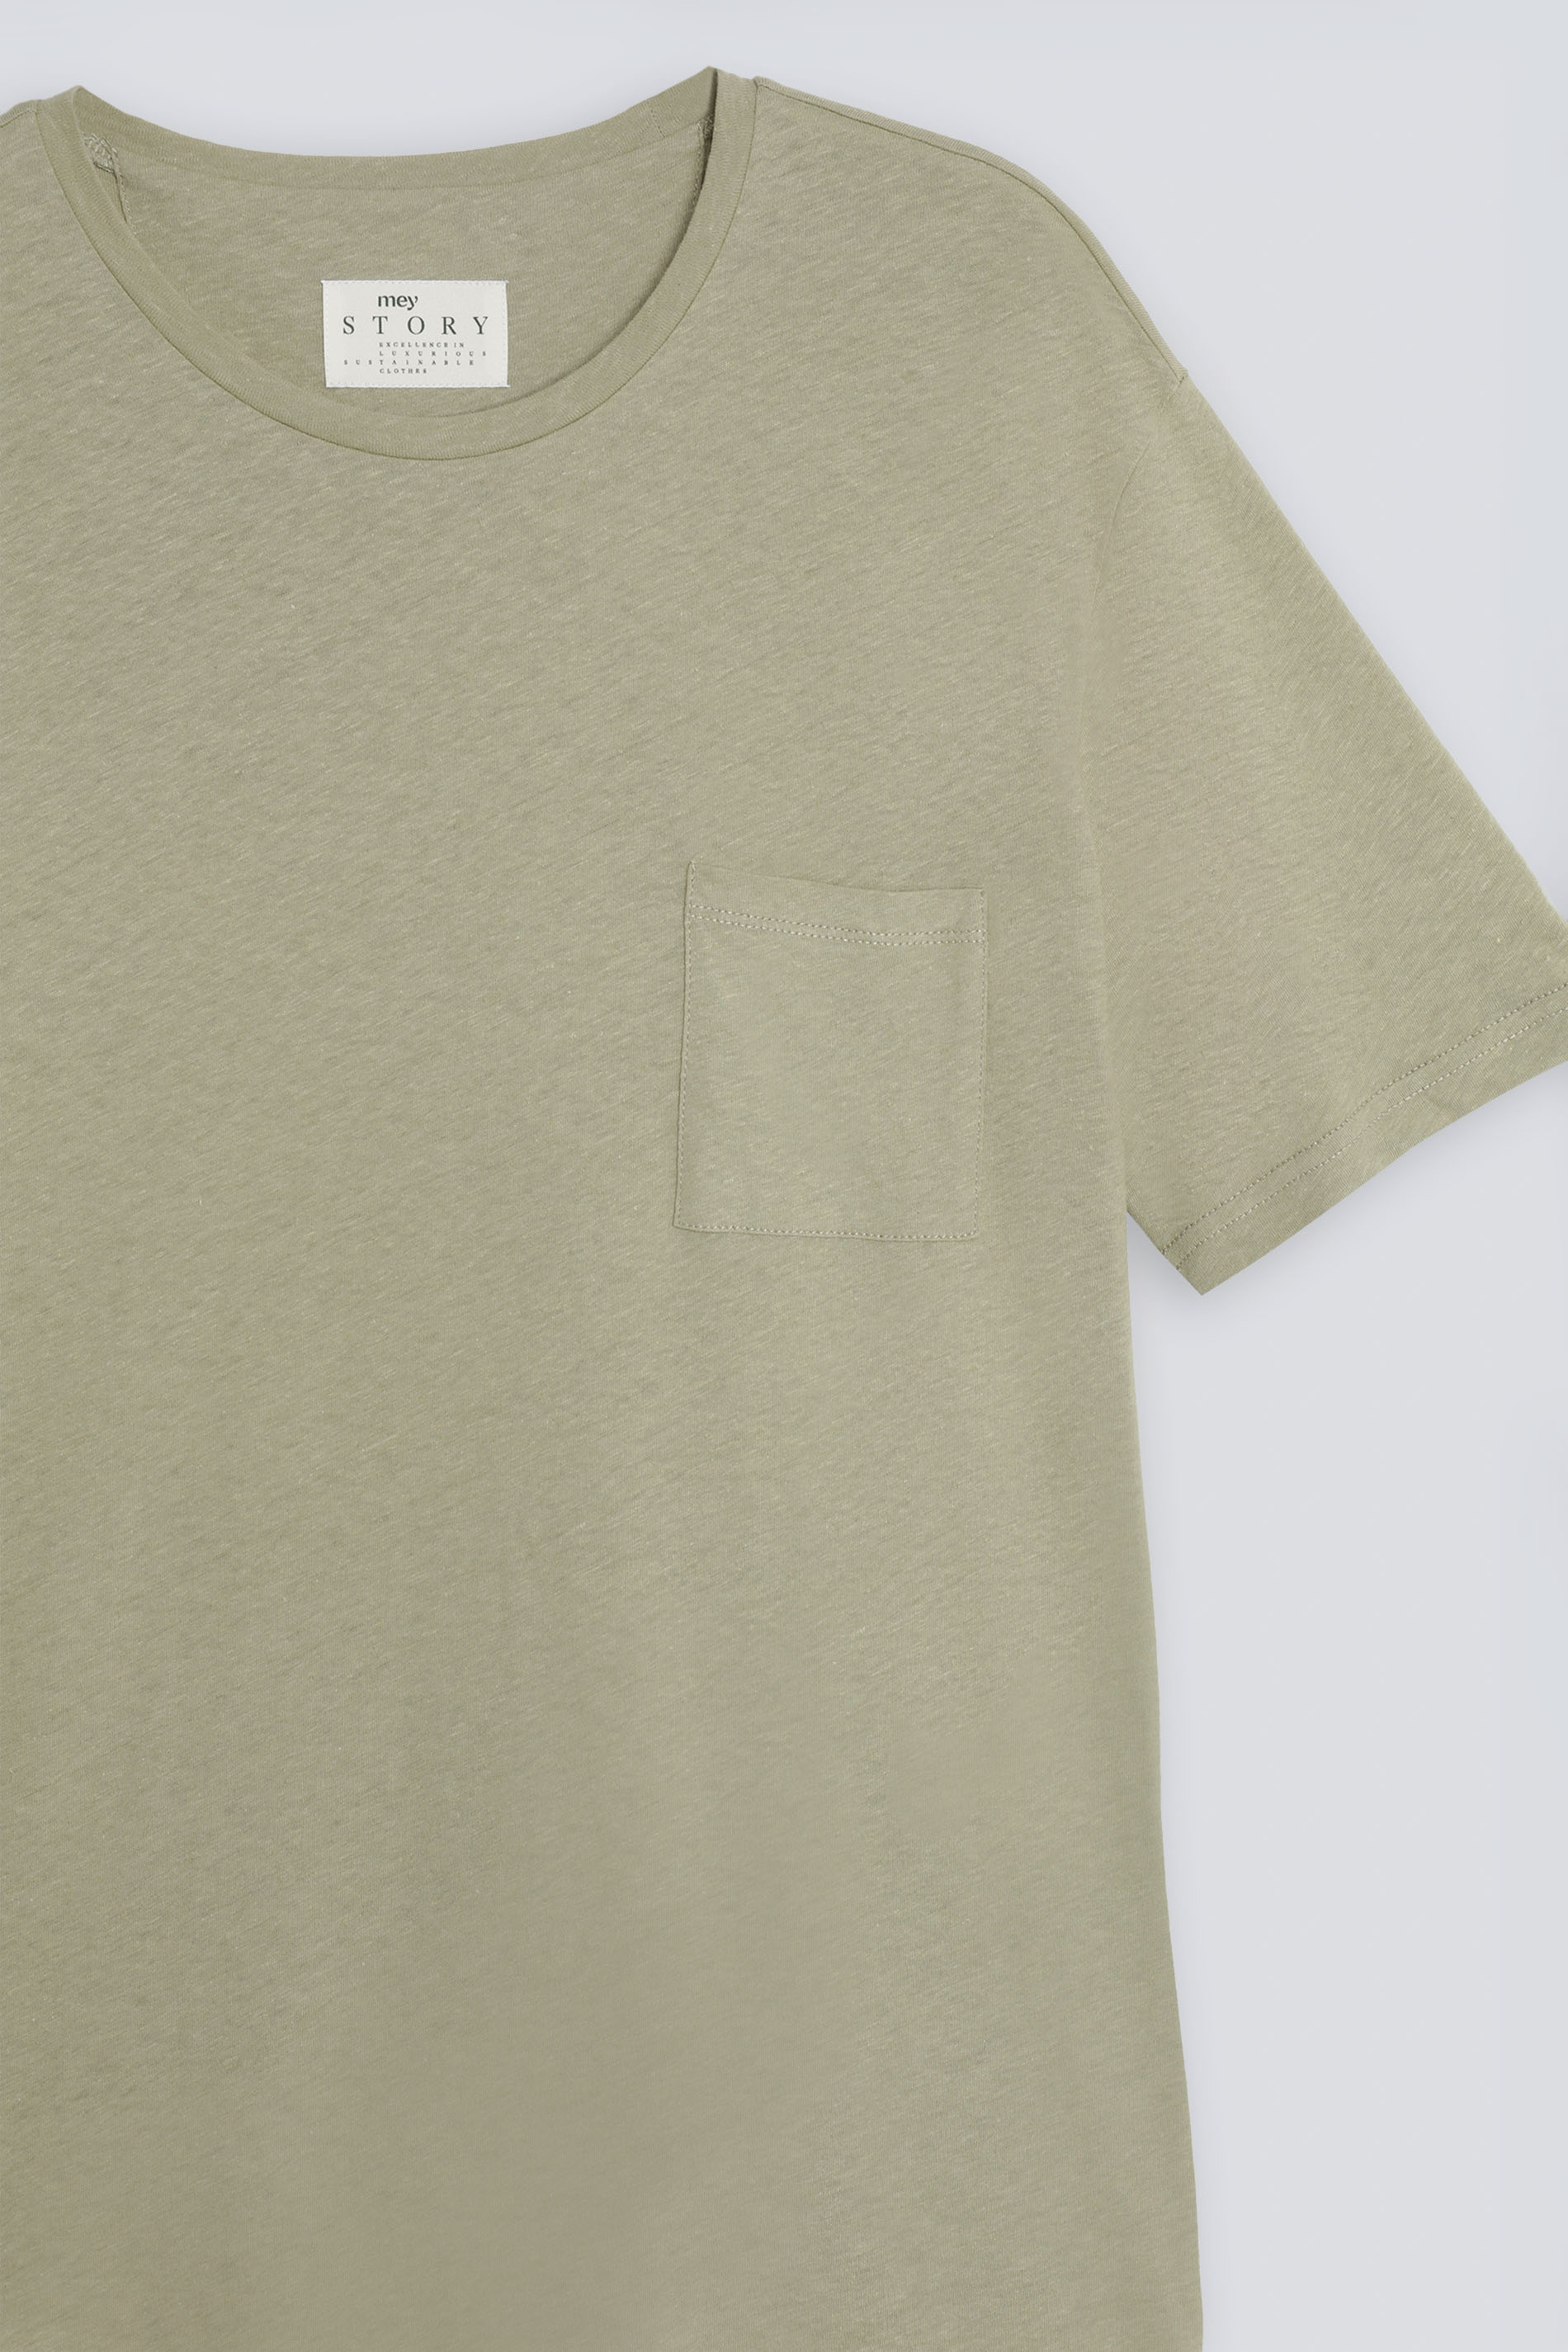 Crewneck shirt Serie Lino Detailweergave 01 | mey®